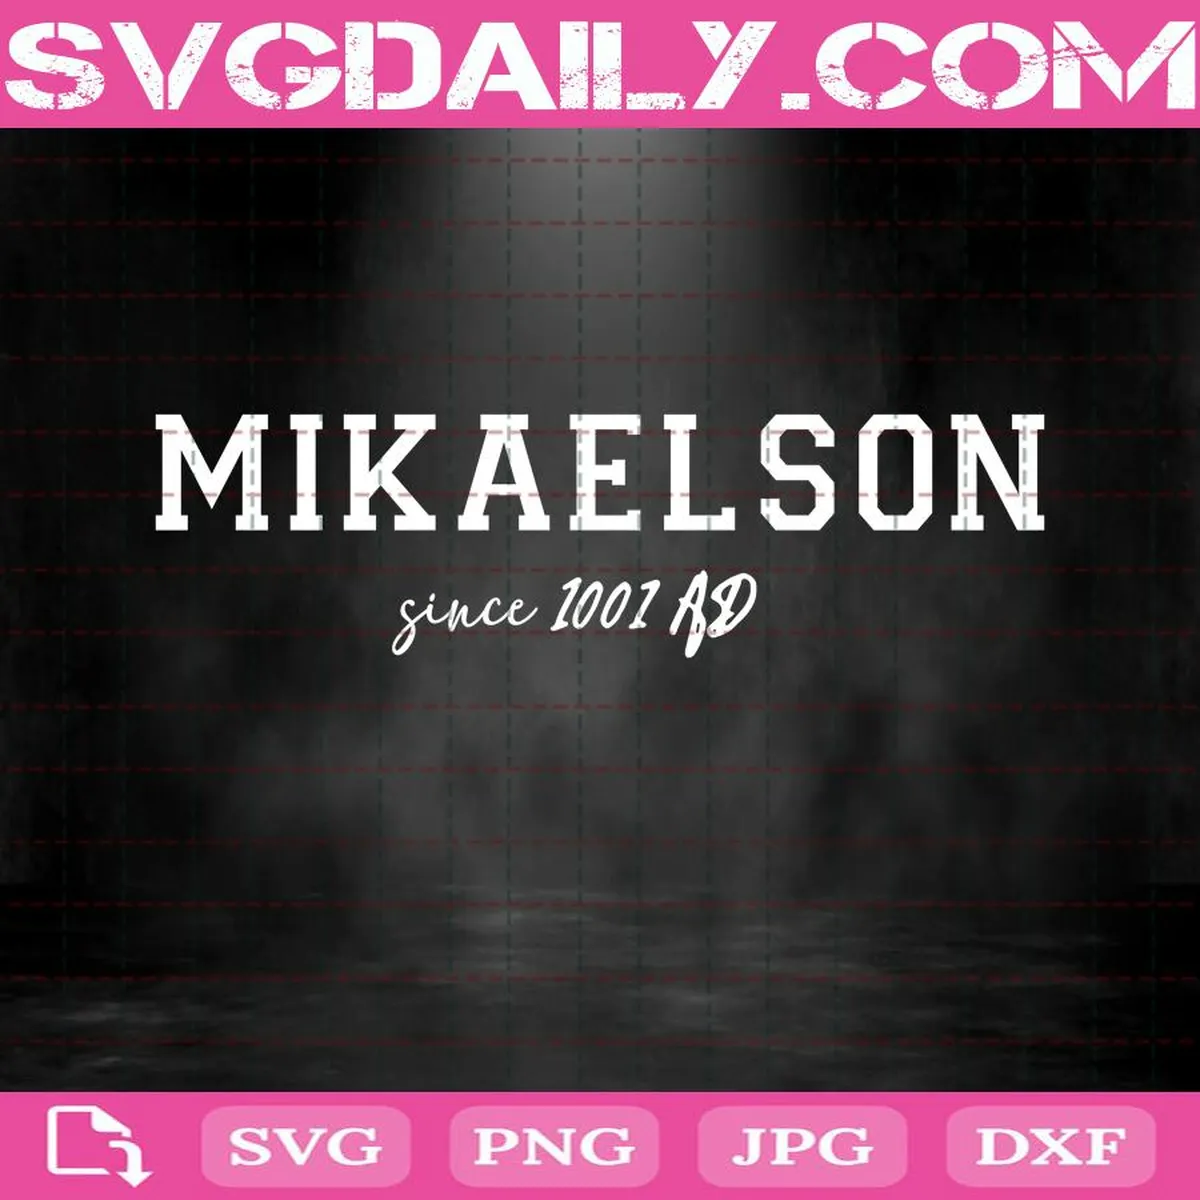 Mikaelson Since 1001 AD Svg, Mikaelson Svg, Since 1001 AD Svg, Svg Dxf Png Eps Cutting Cut File Silhouette Cricut